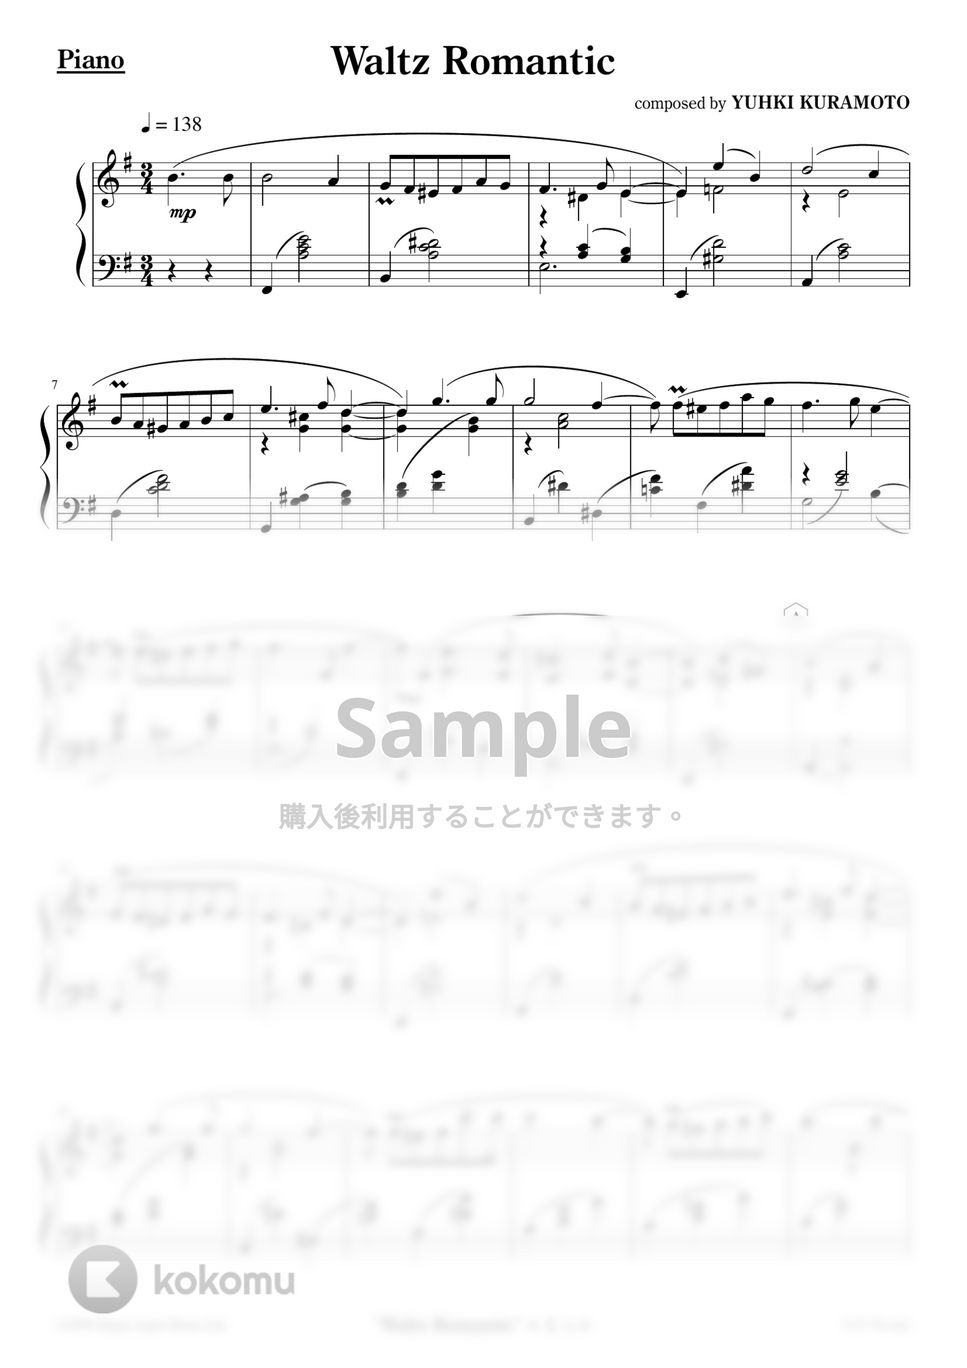 Yuhki Kuramoto - Waltz Romantic by Yuhki Kuramoto